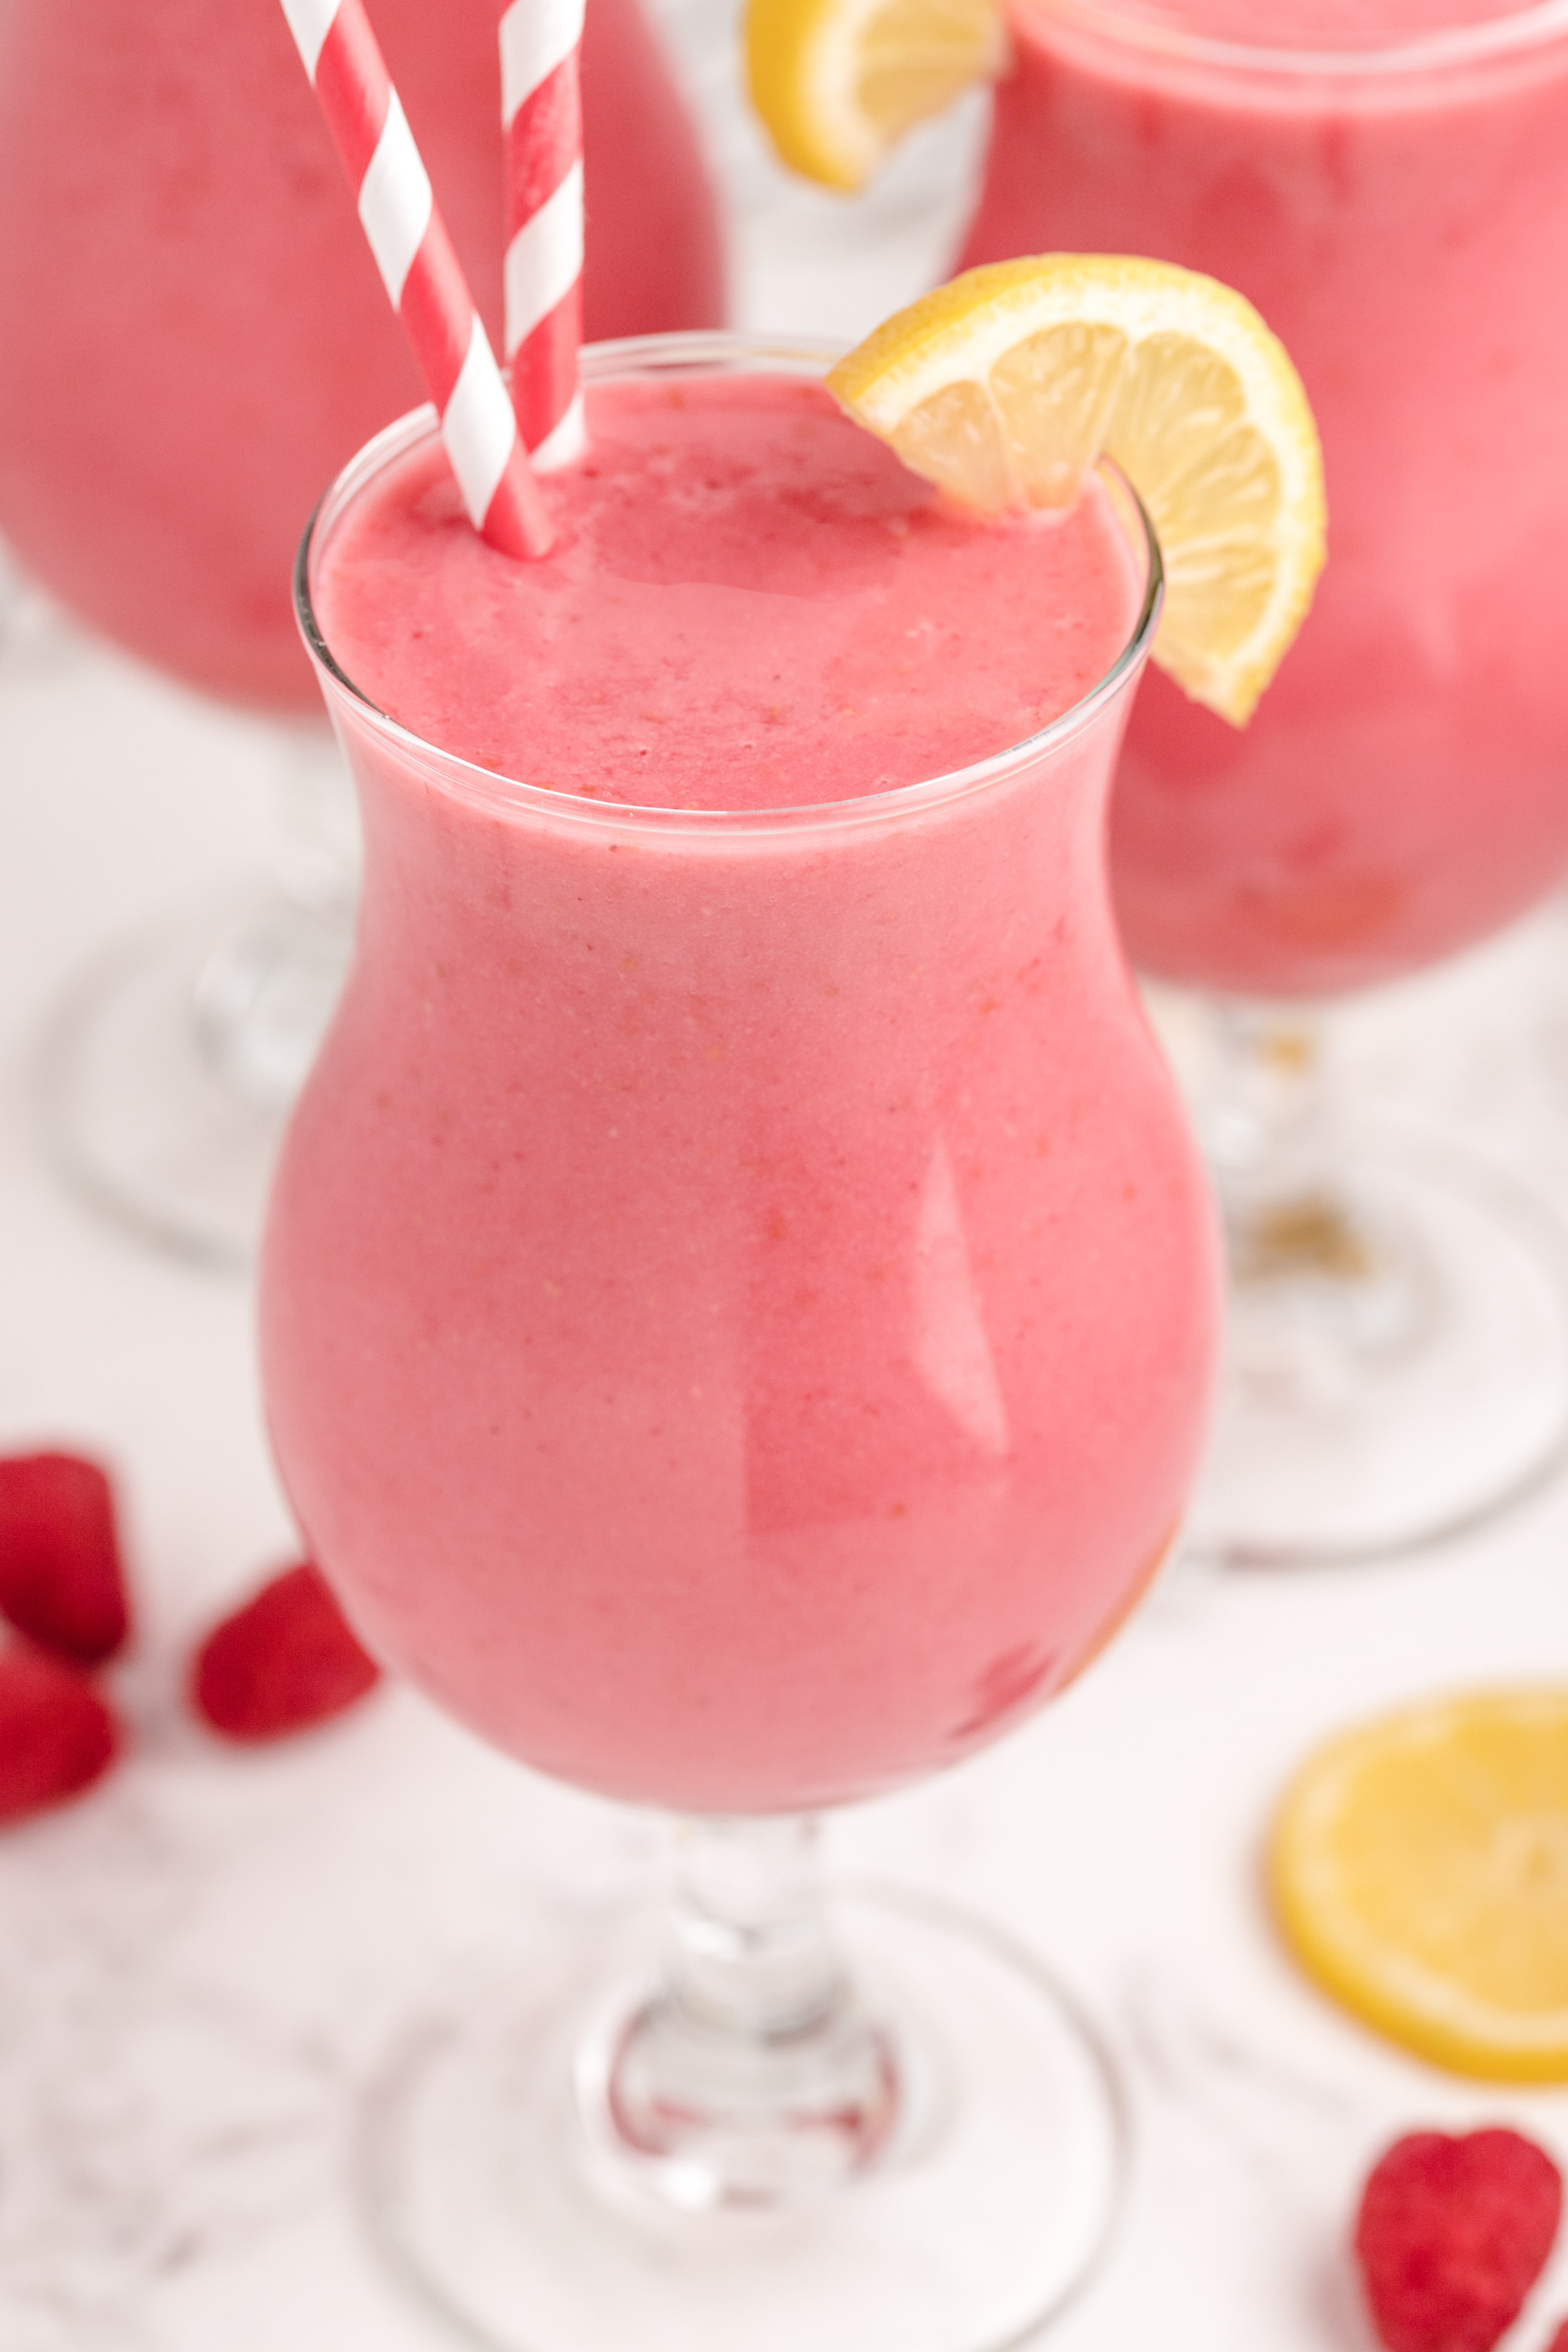 Raspberry smoothie made with lemonade and yogurt